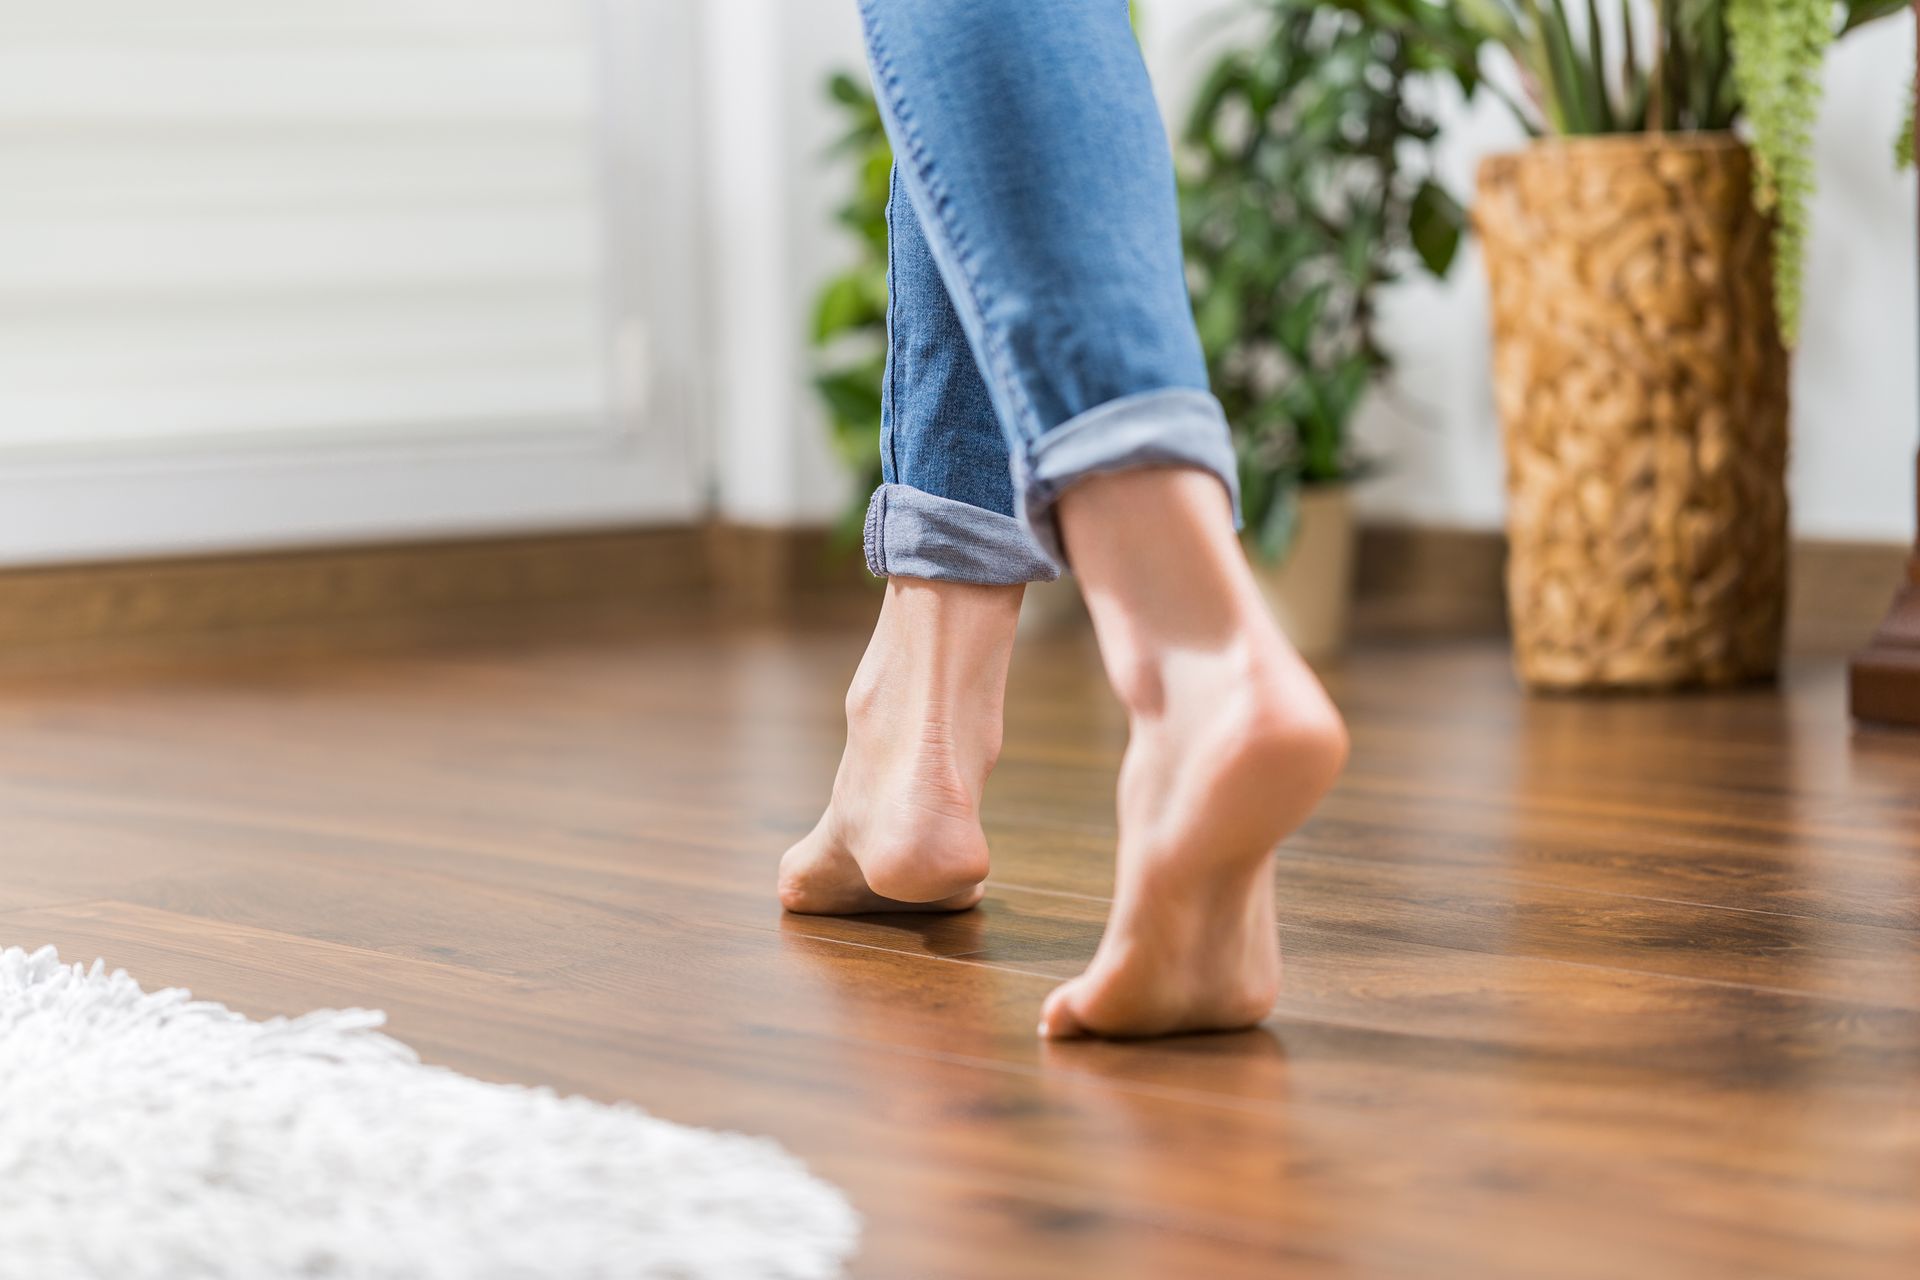 Photo of woman's leg and feet walking barefoot on wooden floor.